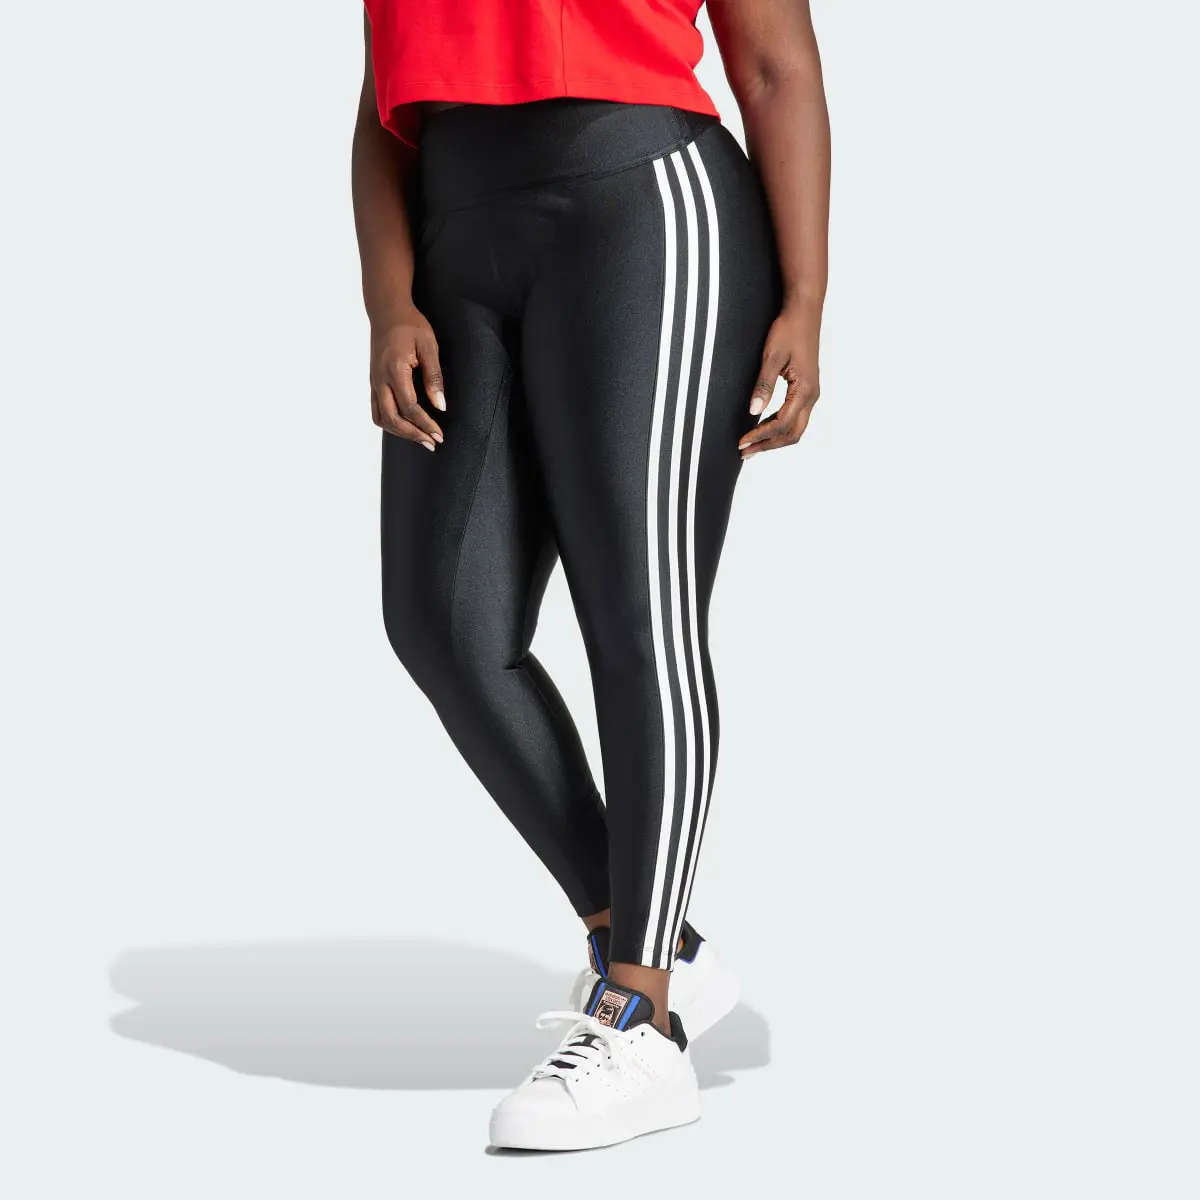 Adidas 3-Stripes Leggings (Plus Size). 1